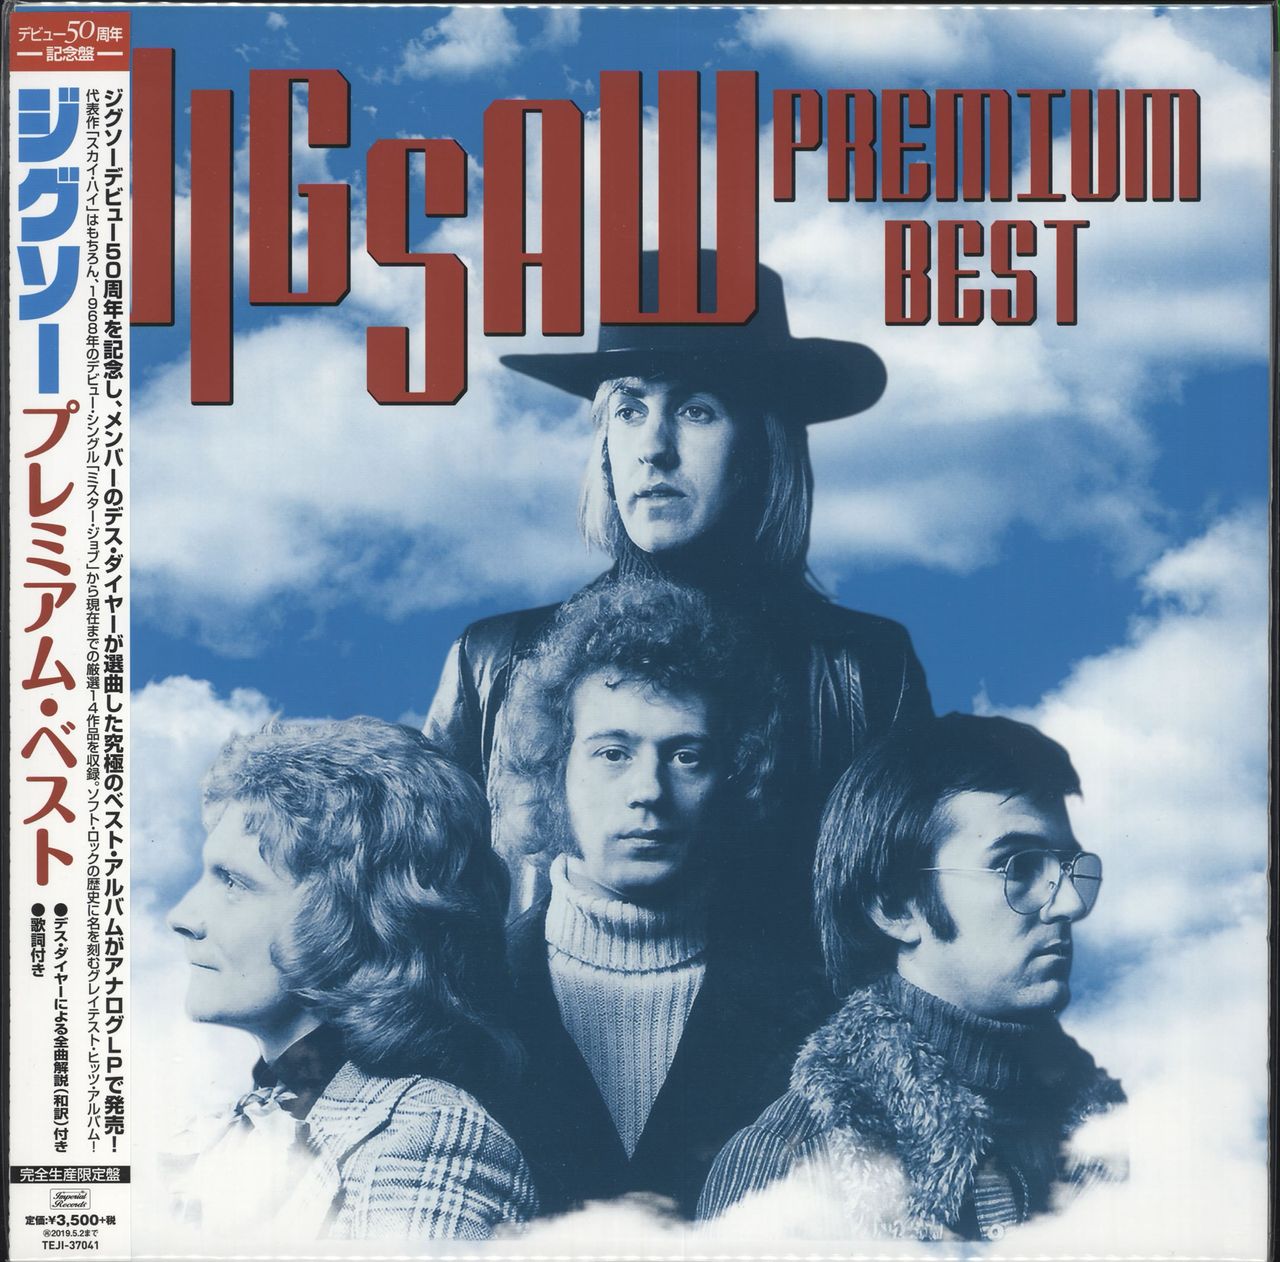 Jigsaw (UK) Premium Best Japanese Vinyl LP — RareVinyl.com